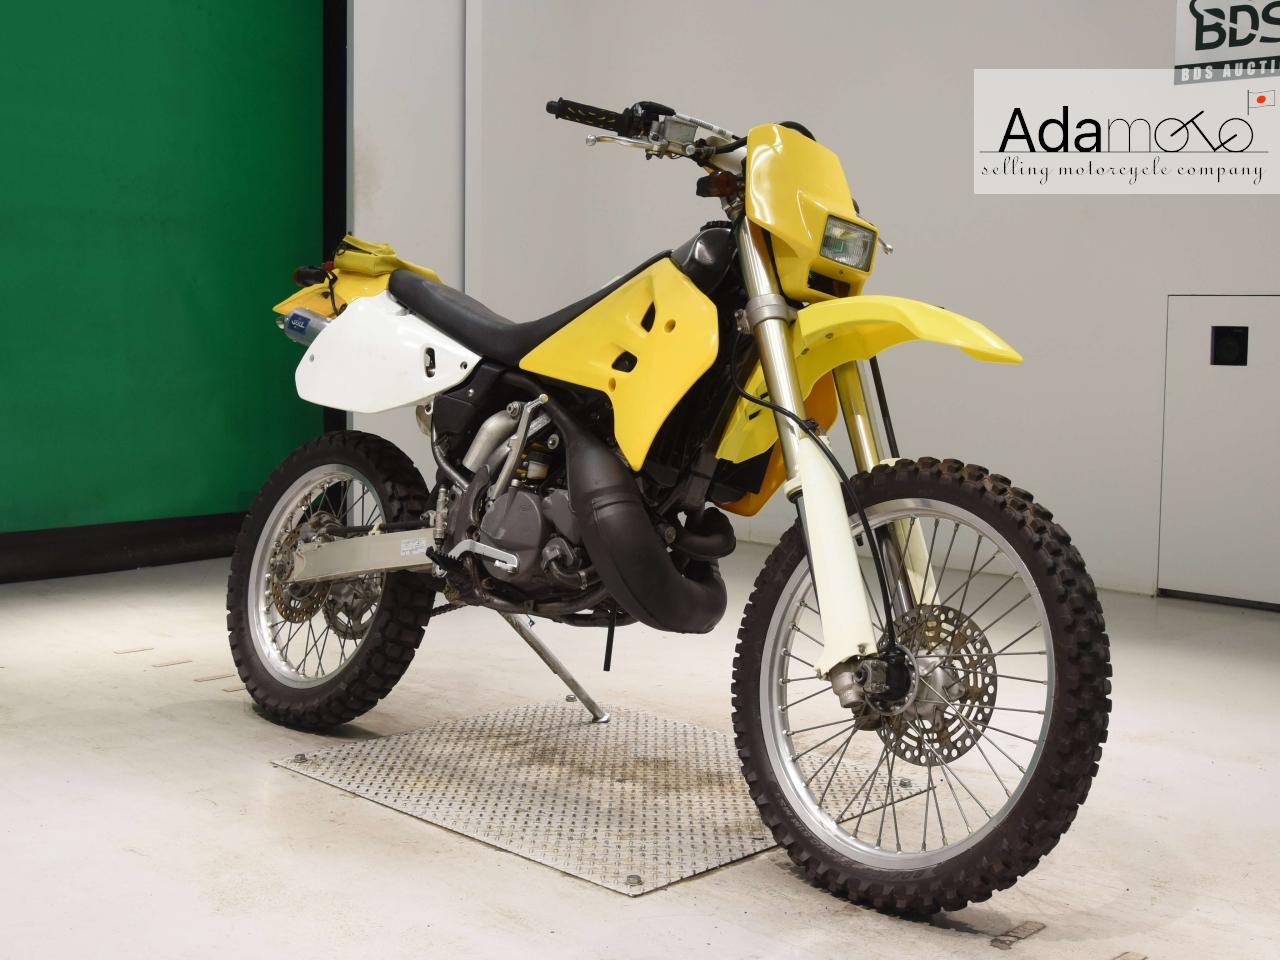 Suzuki RMX250S - Adamoto - Motorcycles from Japan